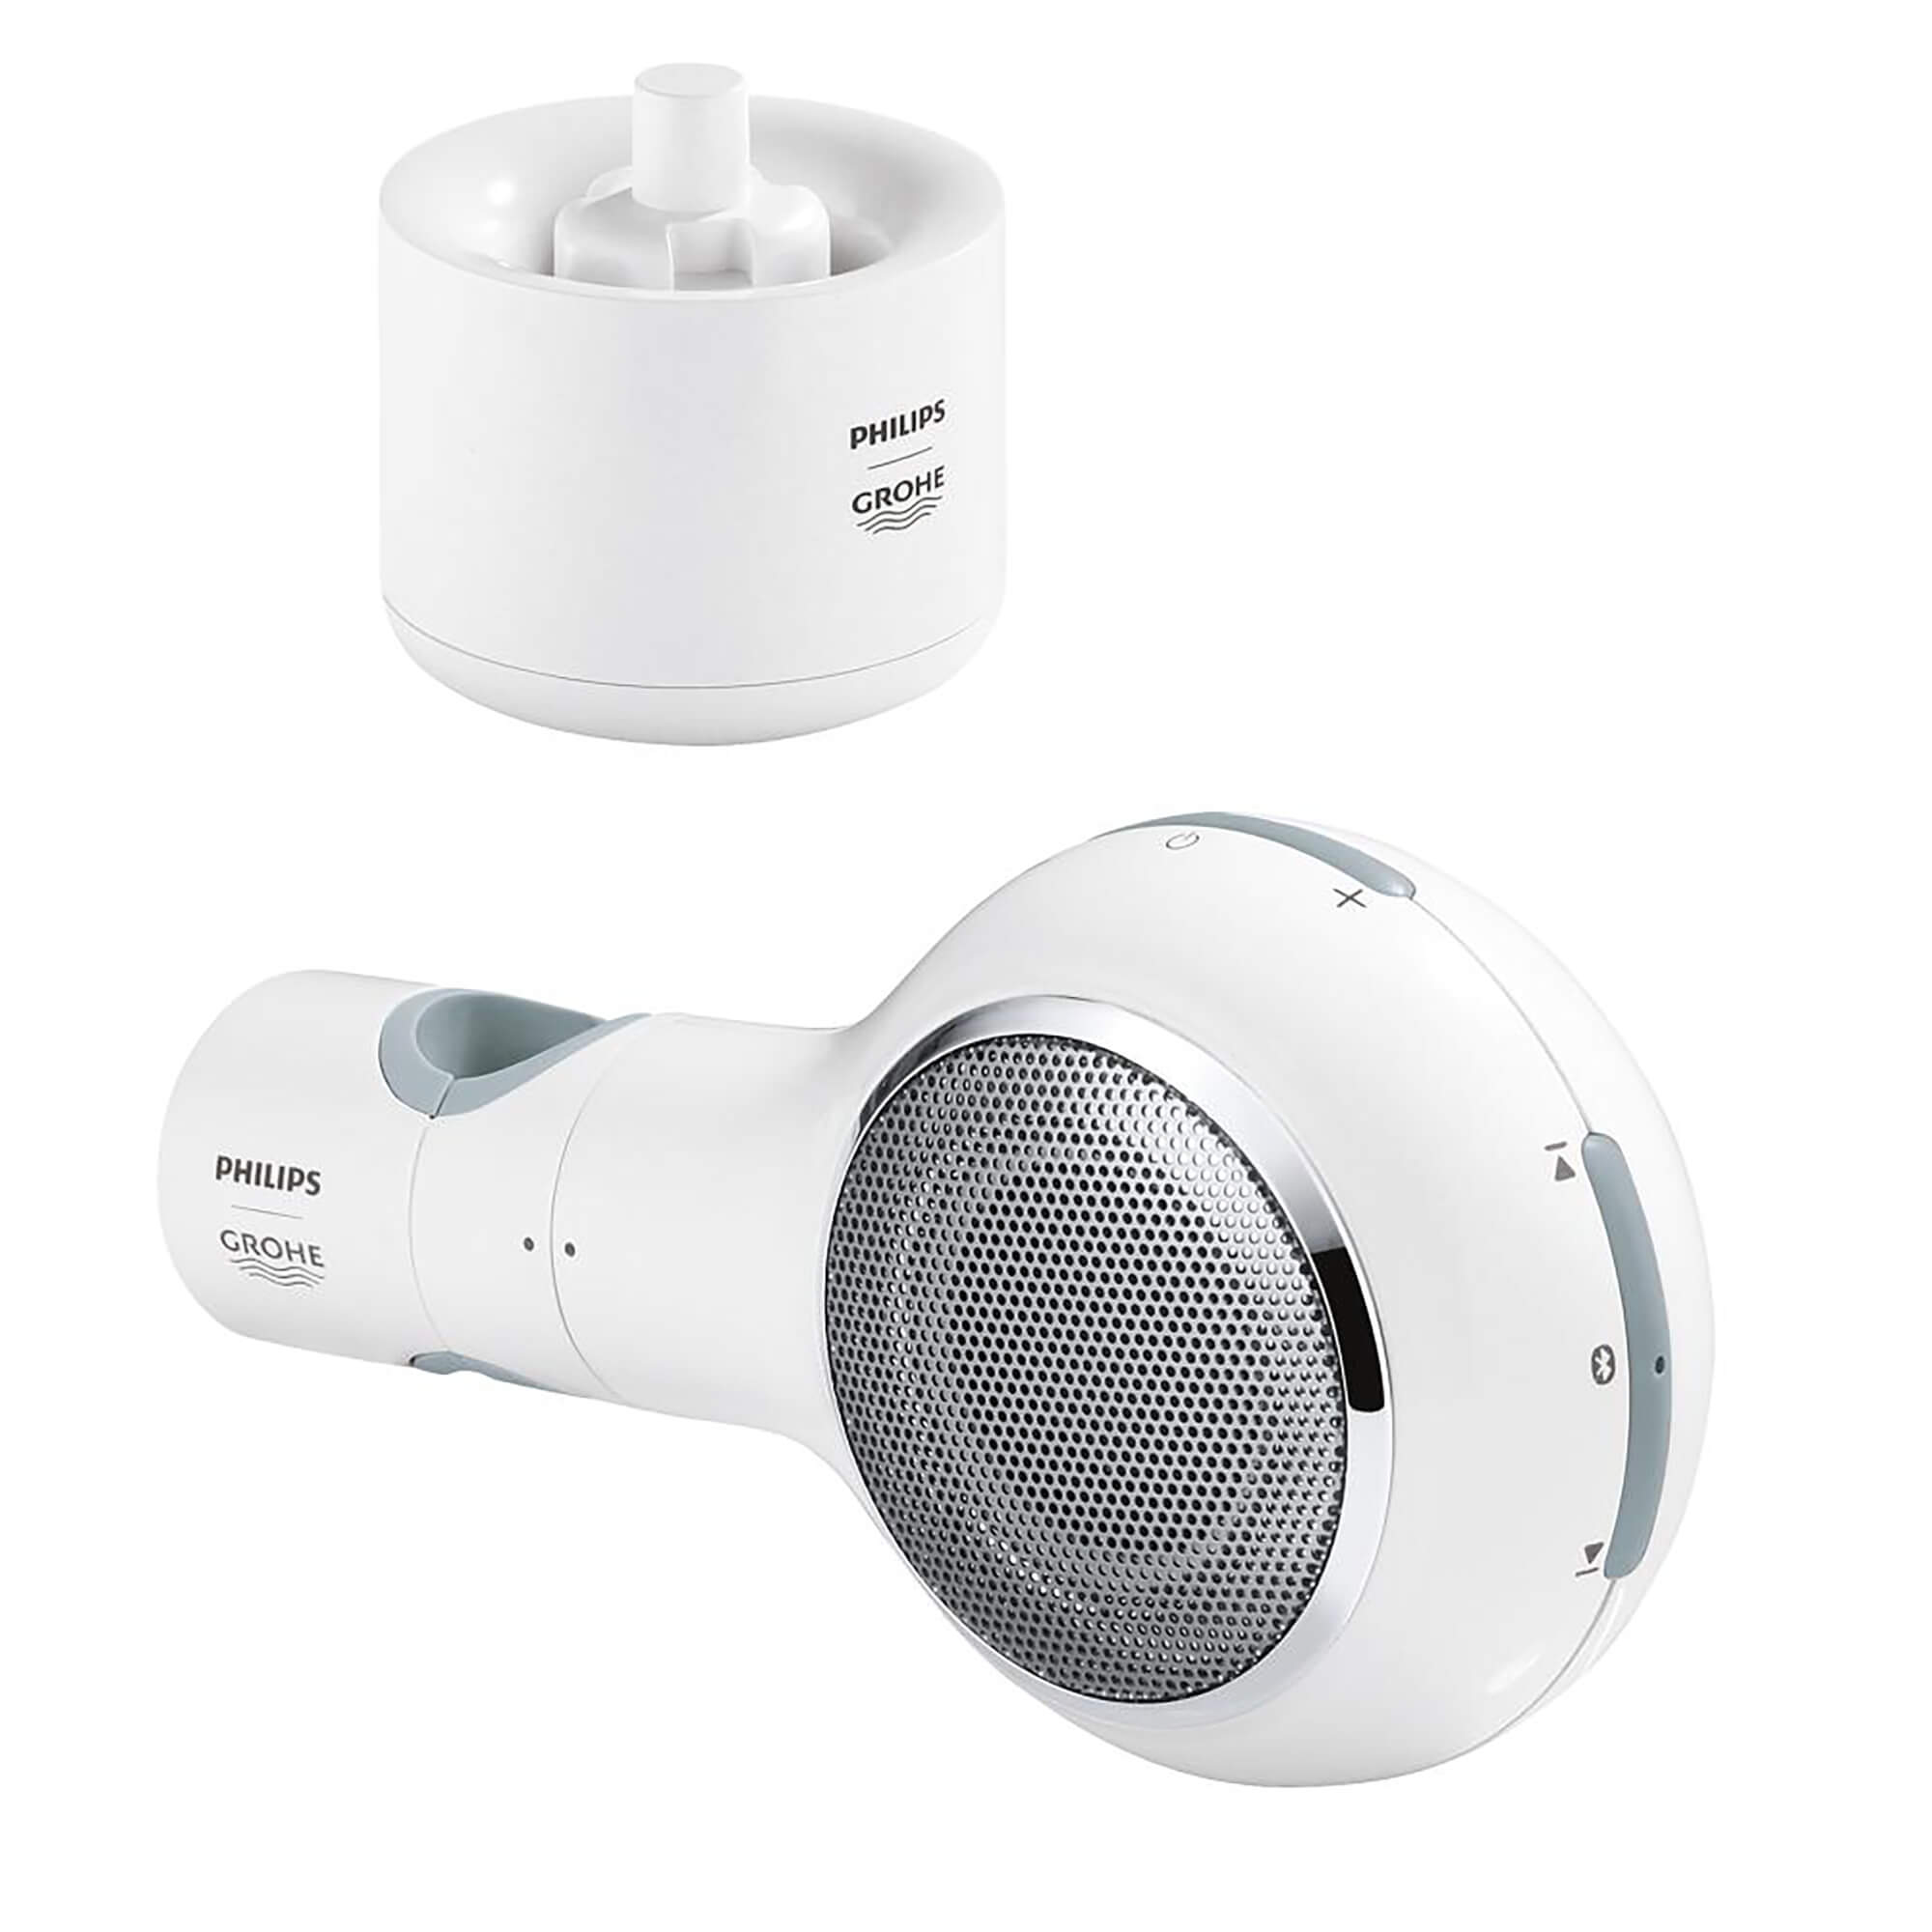 Wireless Shower Speaker